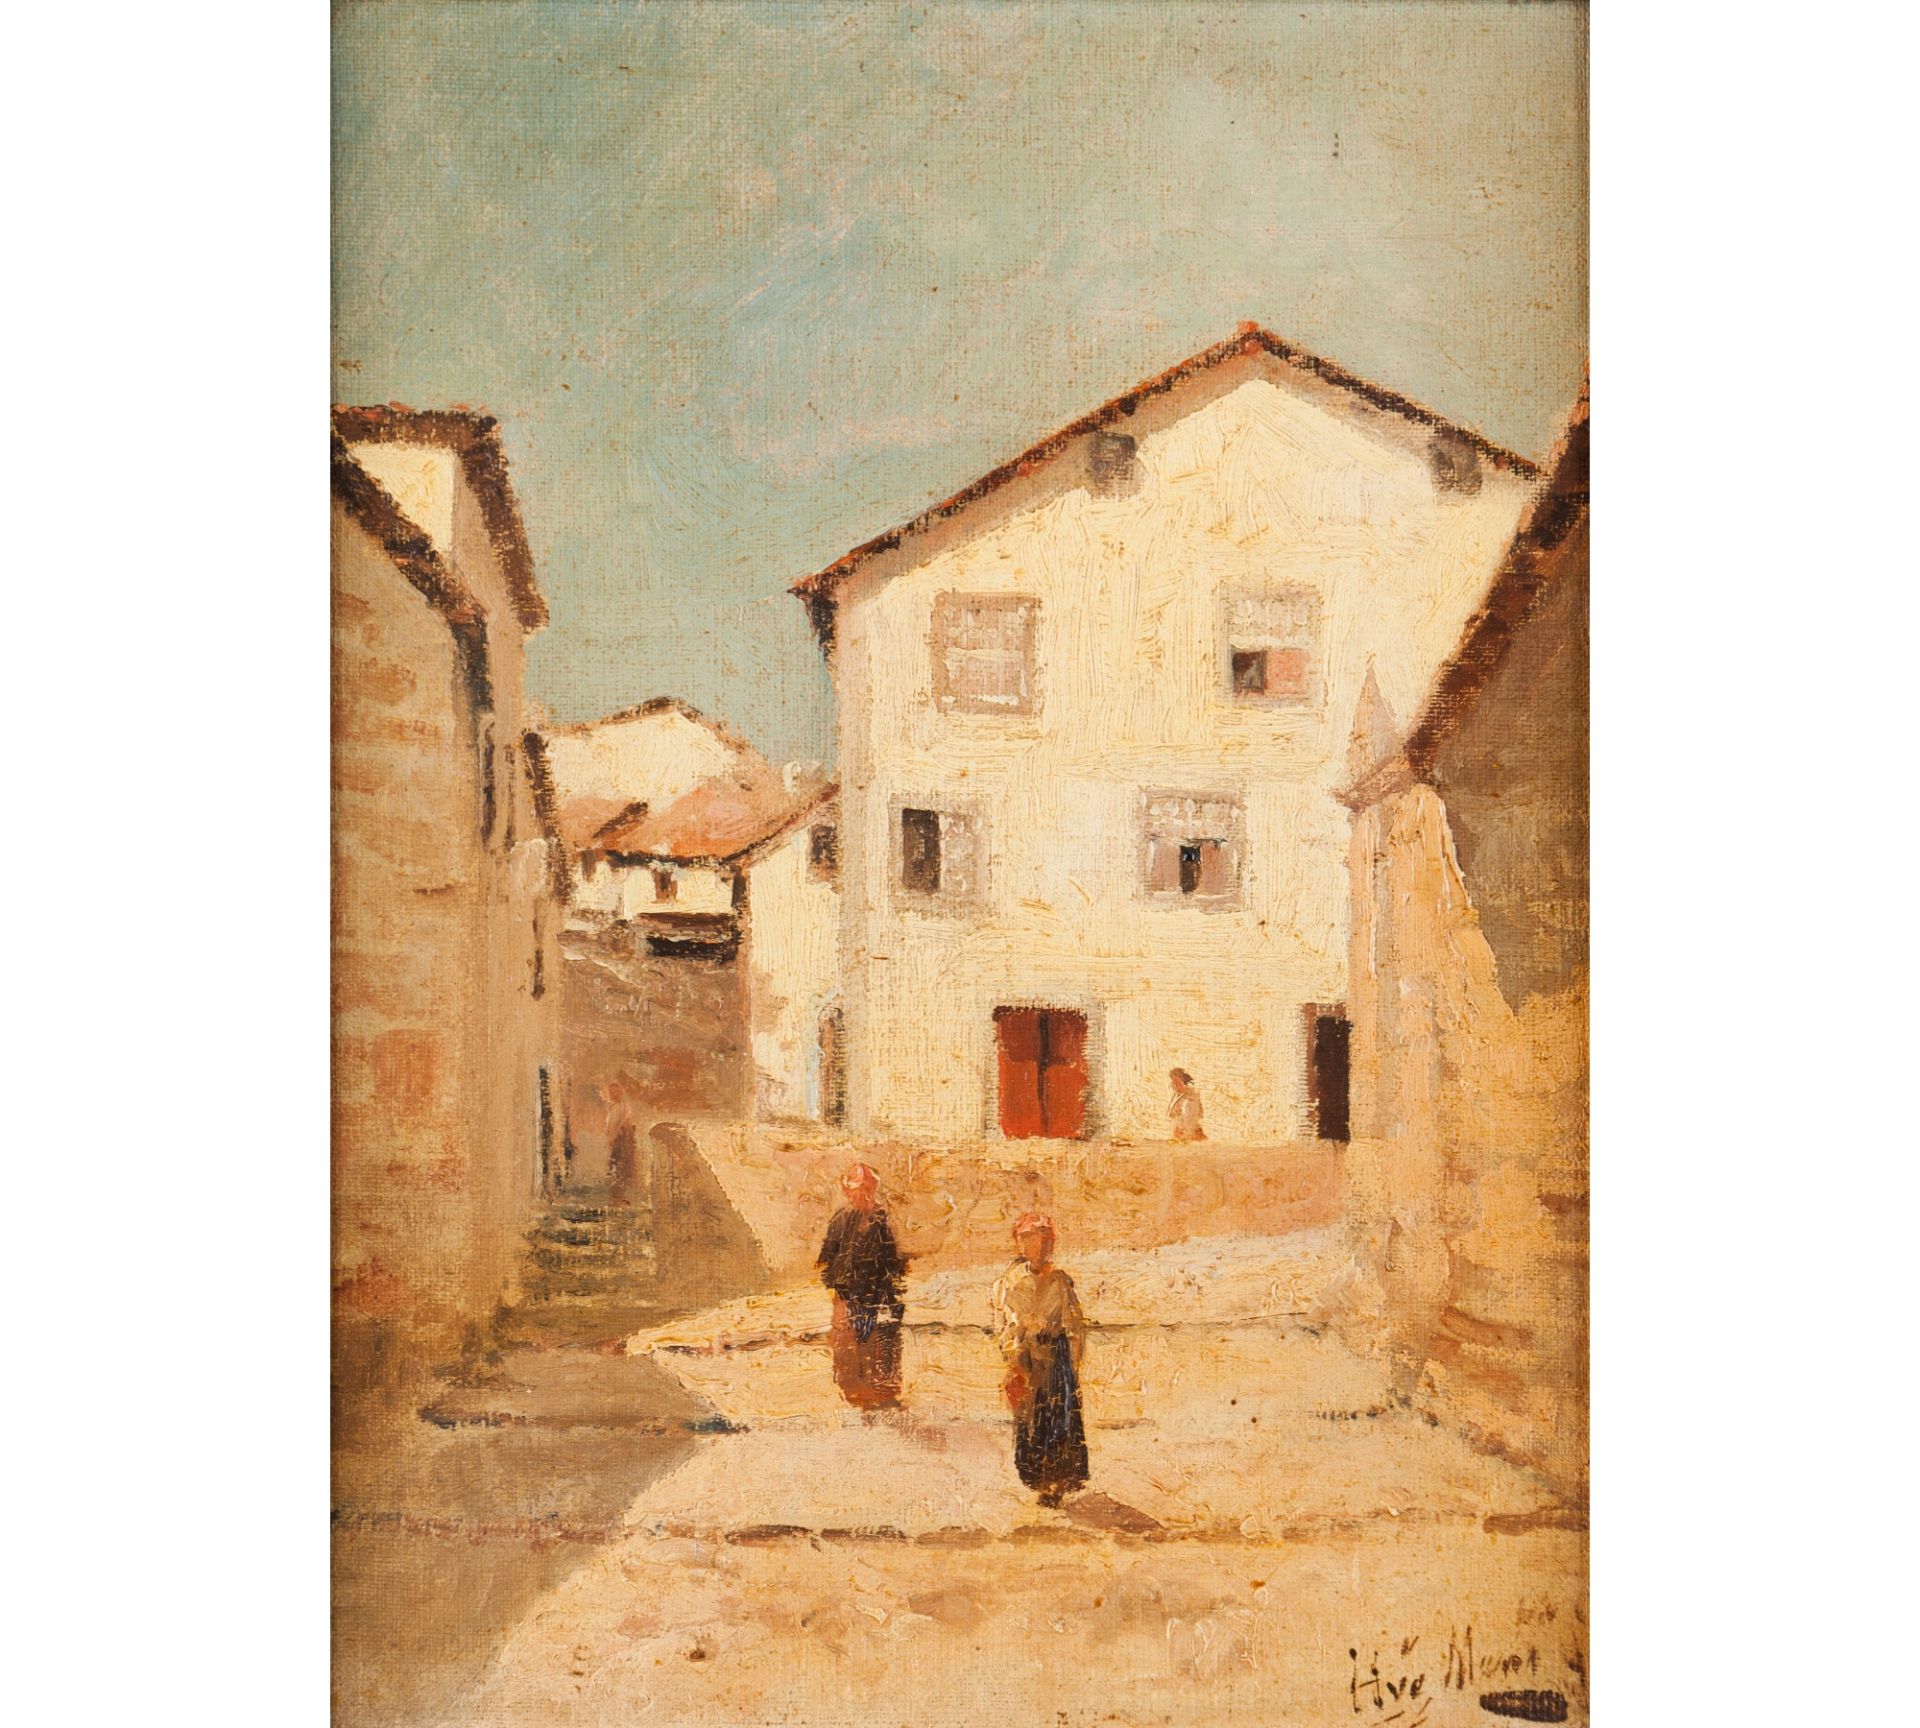 Hygino Mendonça (XIX-1920)A view of a village and figures